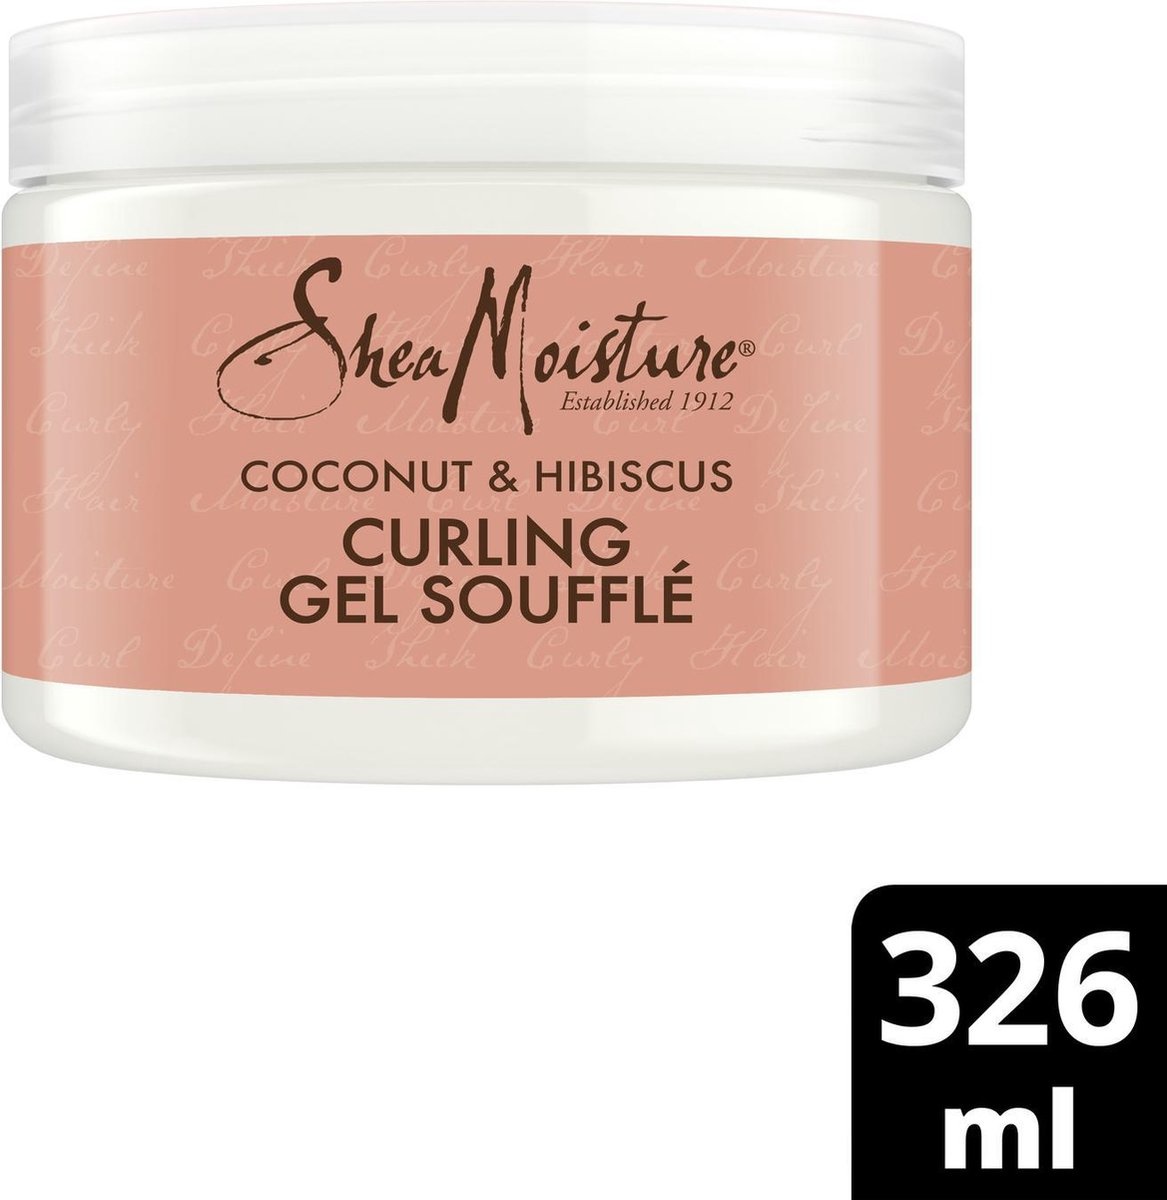 Shea Moisture Coconut & Hibiscus Curling Gel Souffle - 326ml